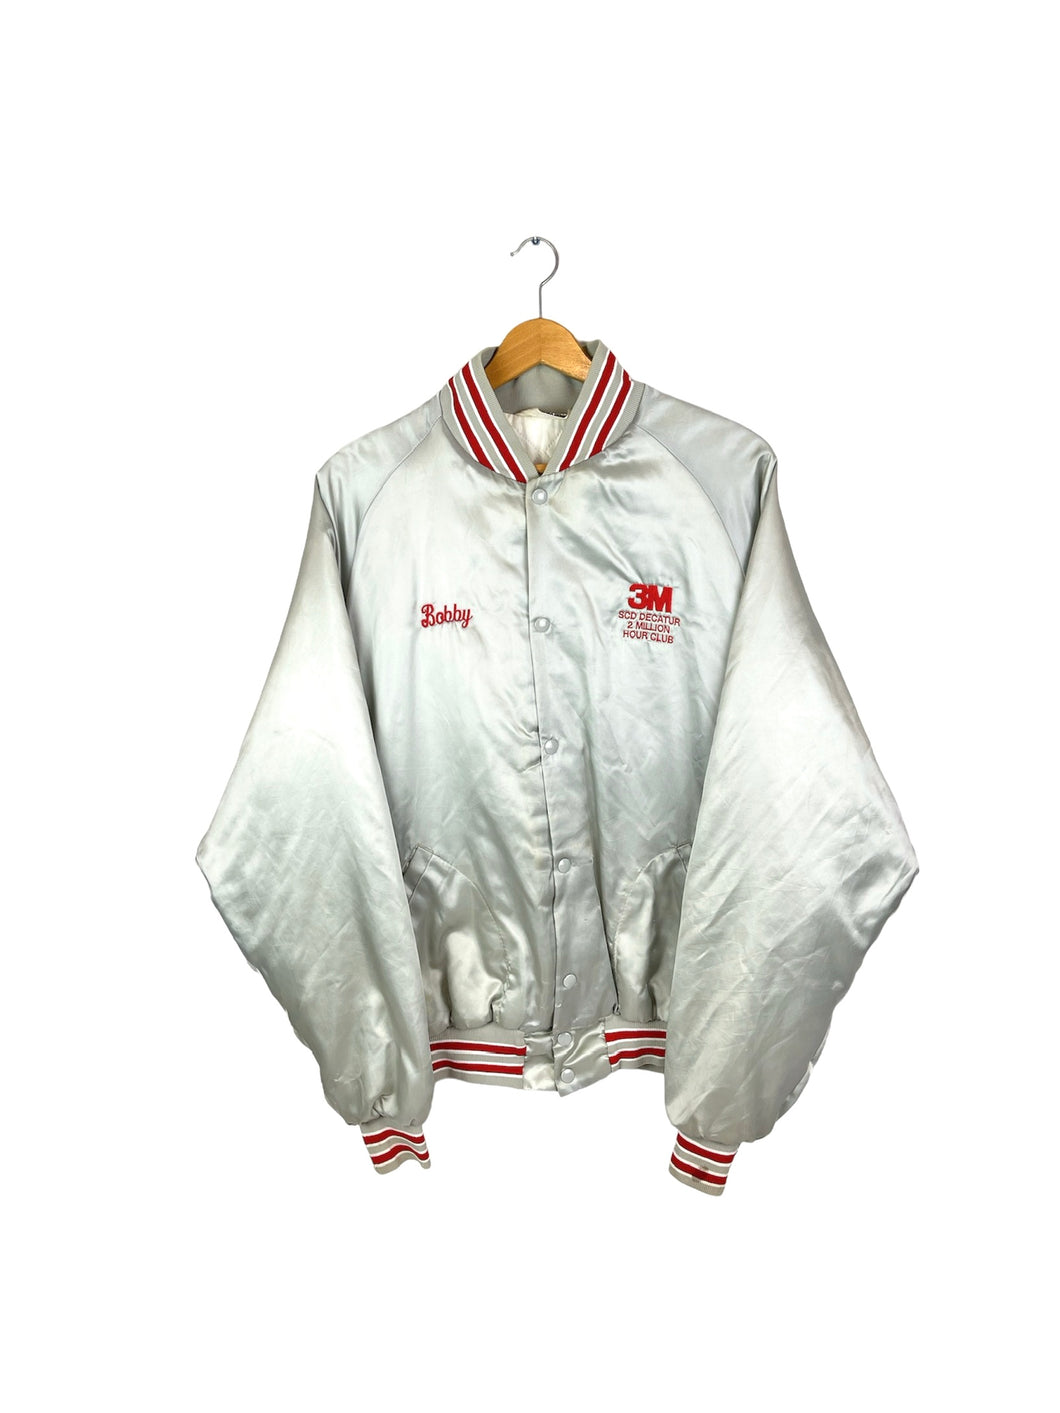 Vintage Varsity Jacket - XLarge